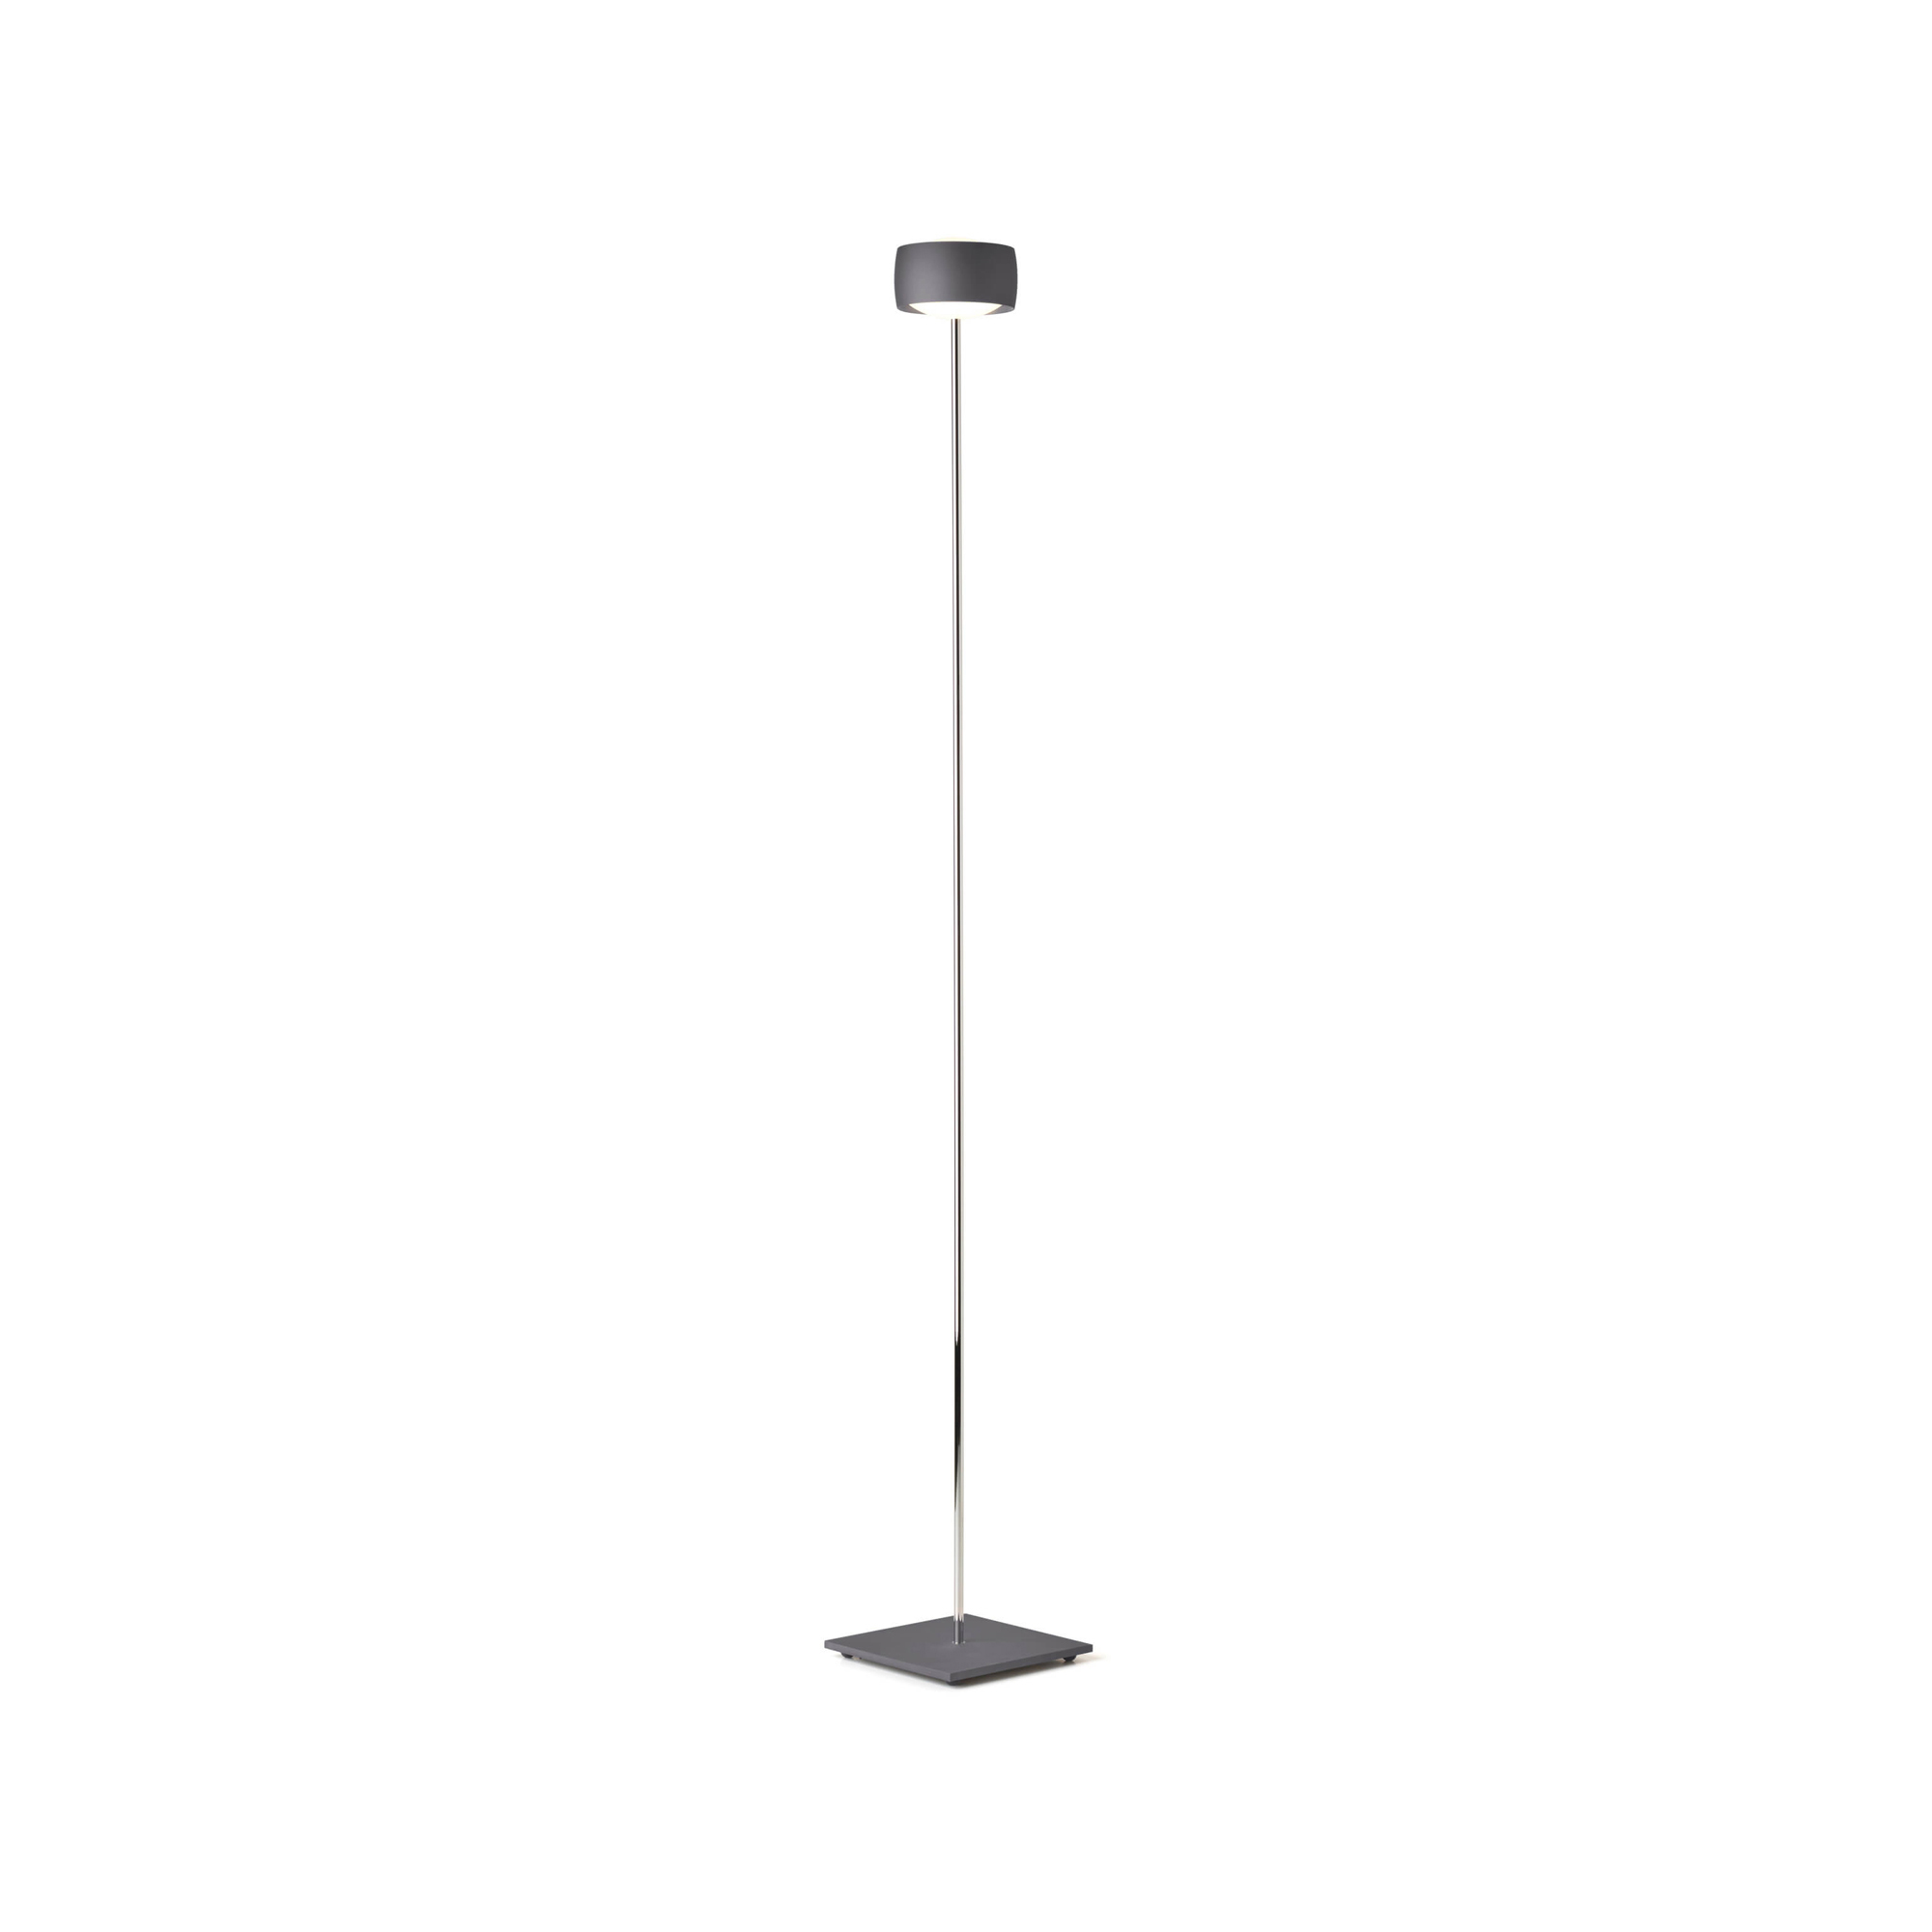 Oligo LED Floor Lamp GRACE grey 2700K 1300lm